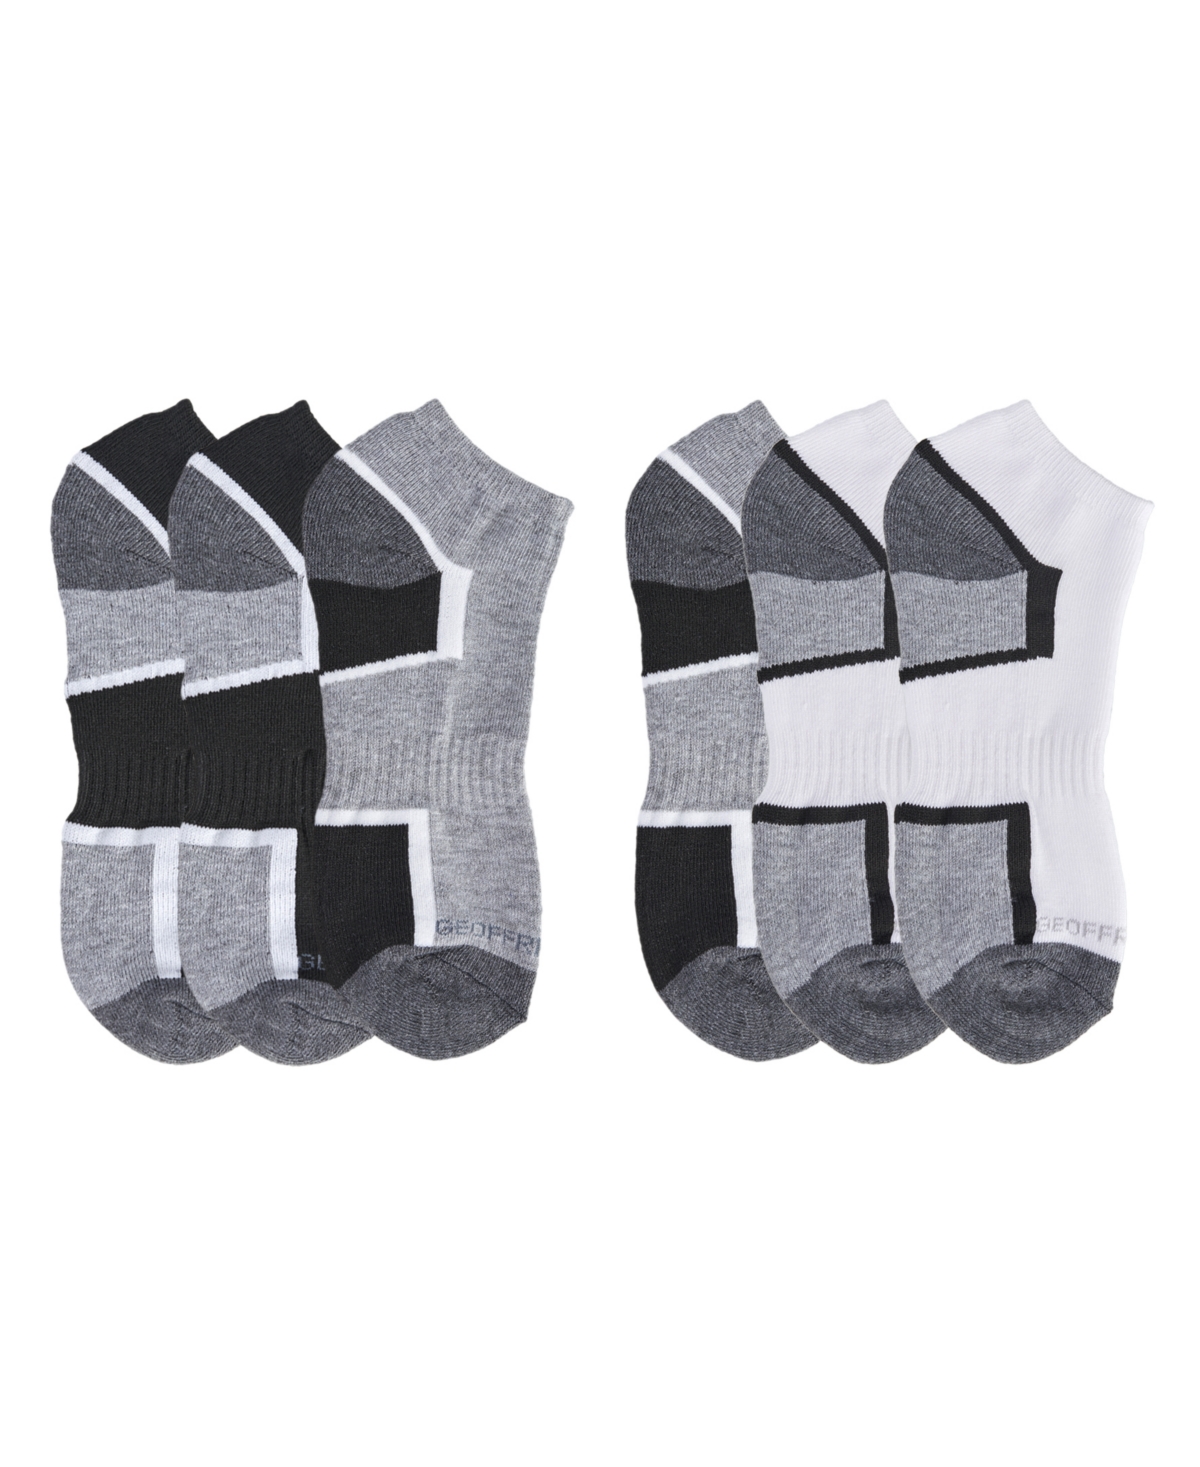 Men's Cushioned Low Cut Socks, Pack of 6 - Black, White, Gray